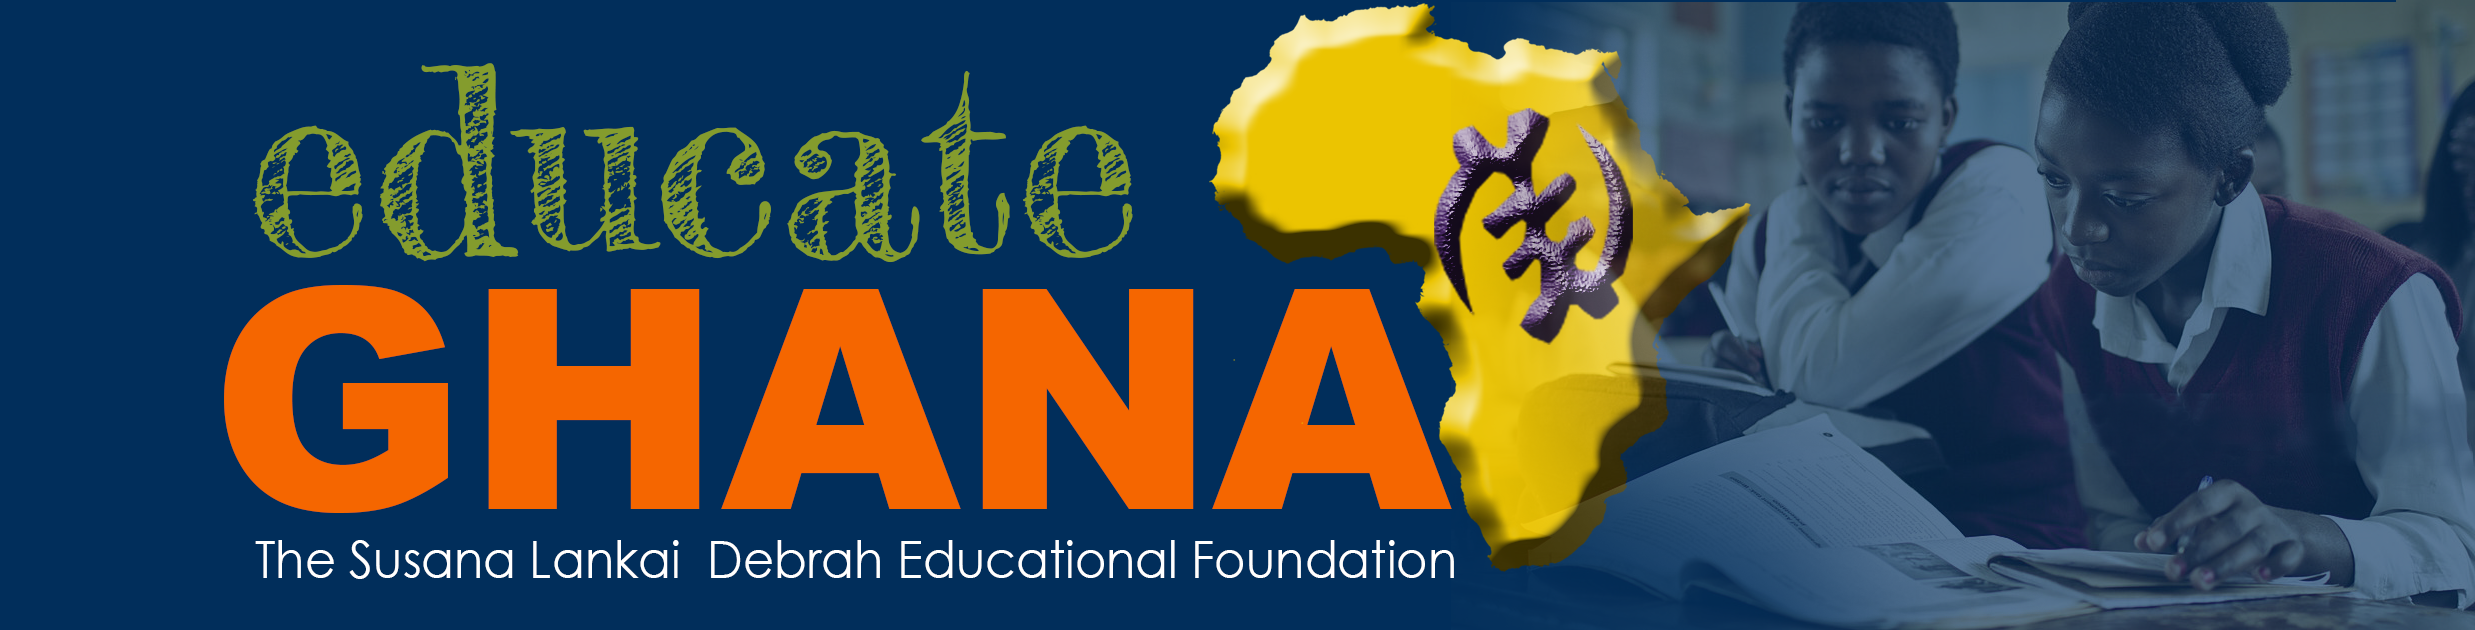 Susana Lankai Debrah Educational Foundation logo